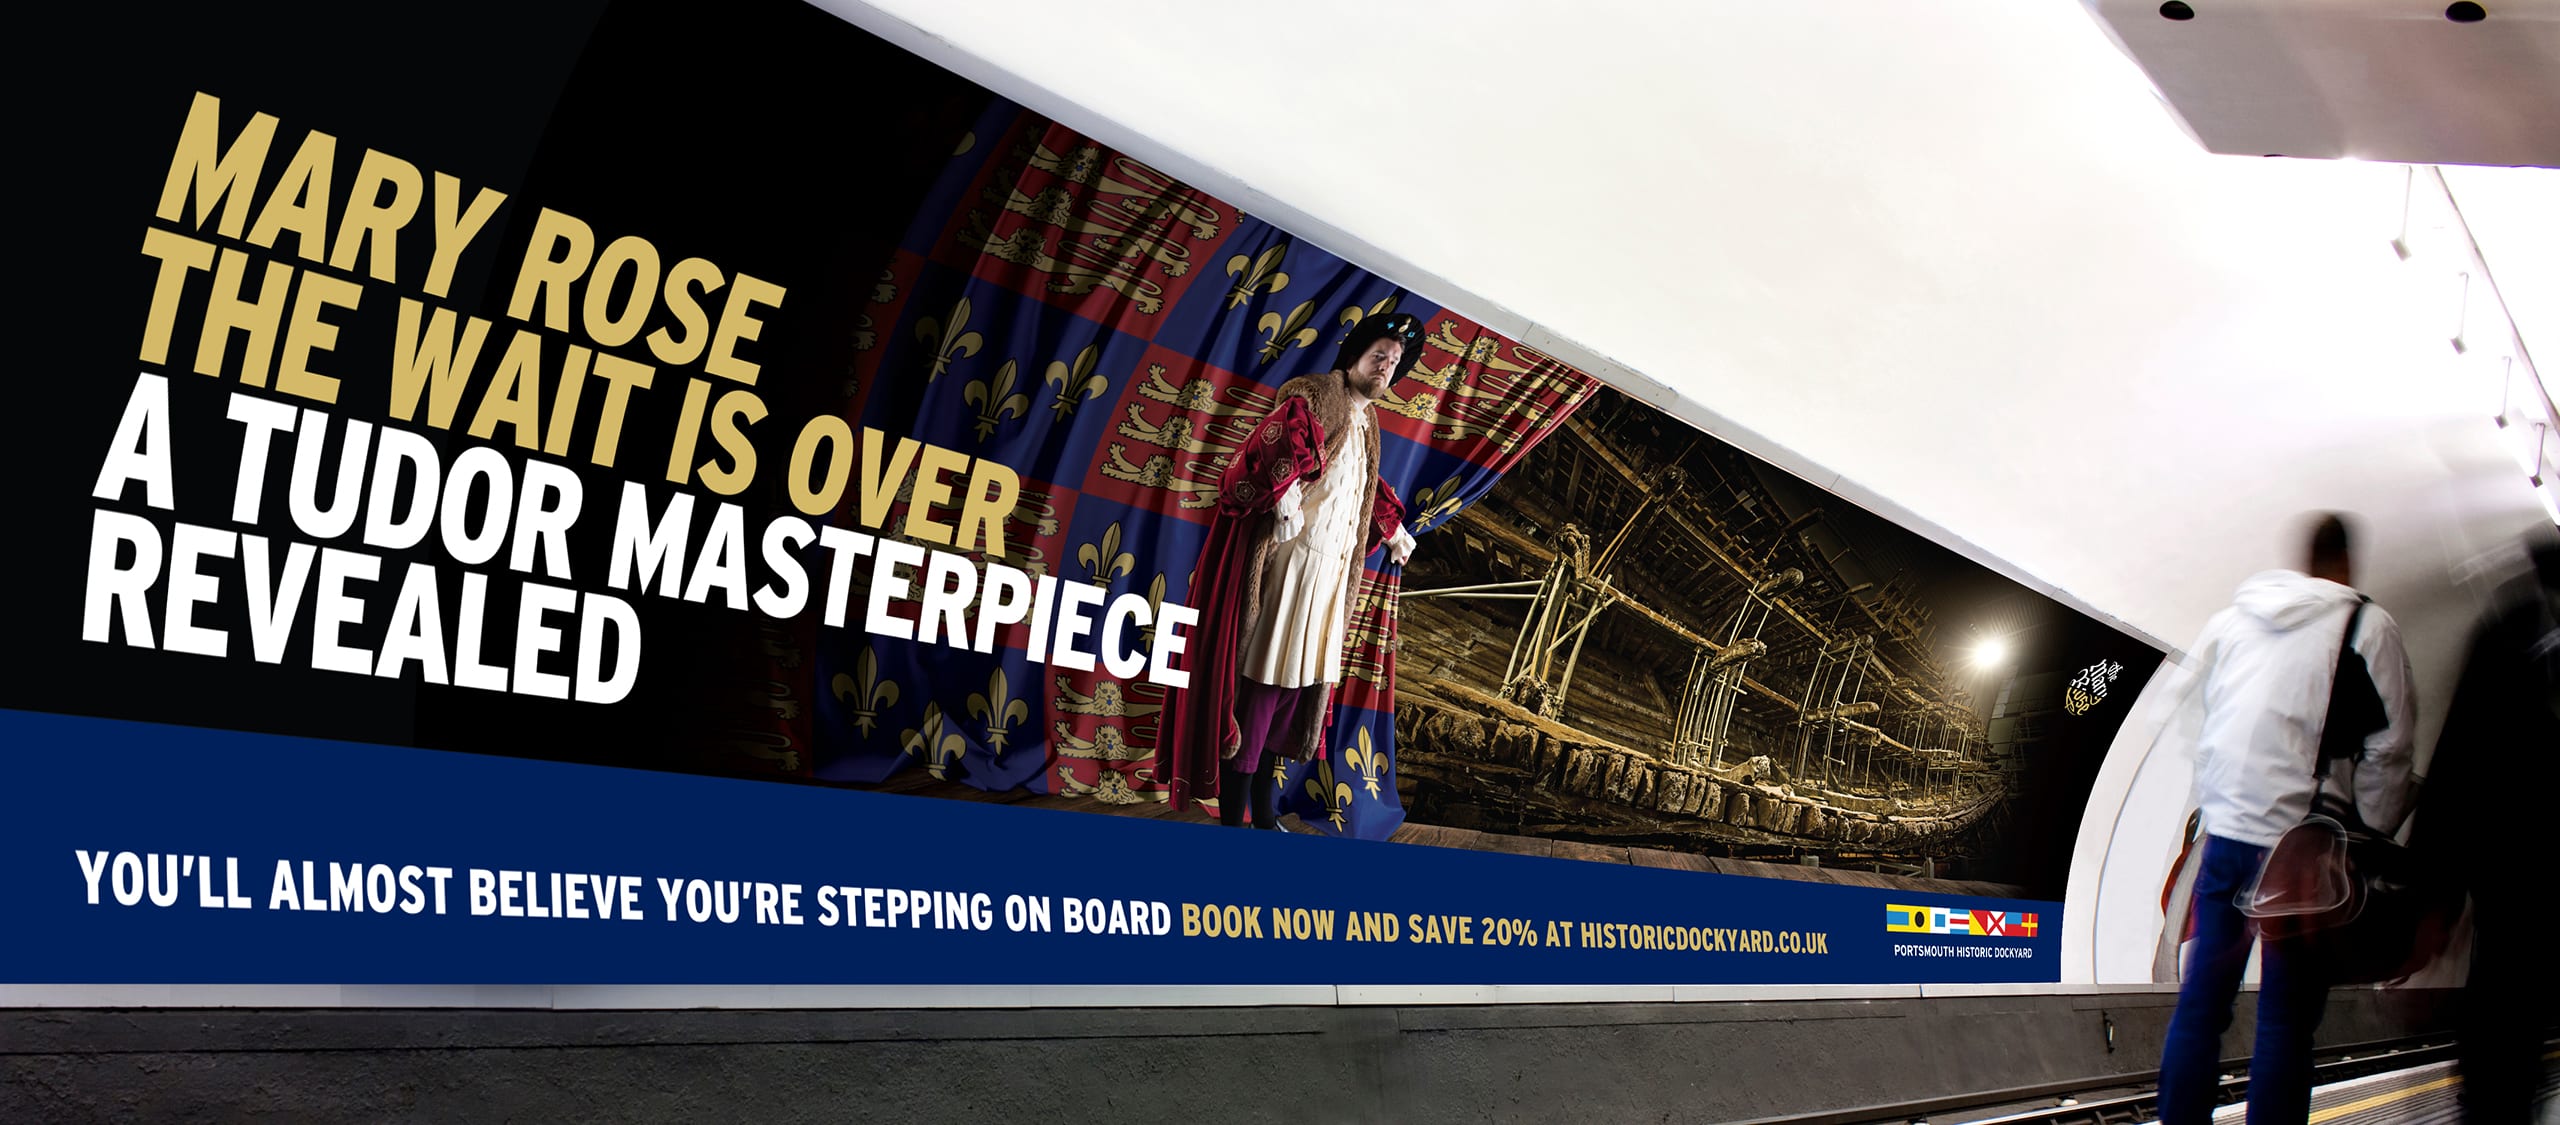 Mary Rose advertising on the London Underground platform walls